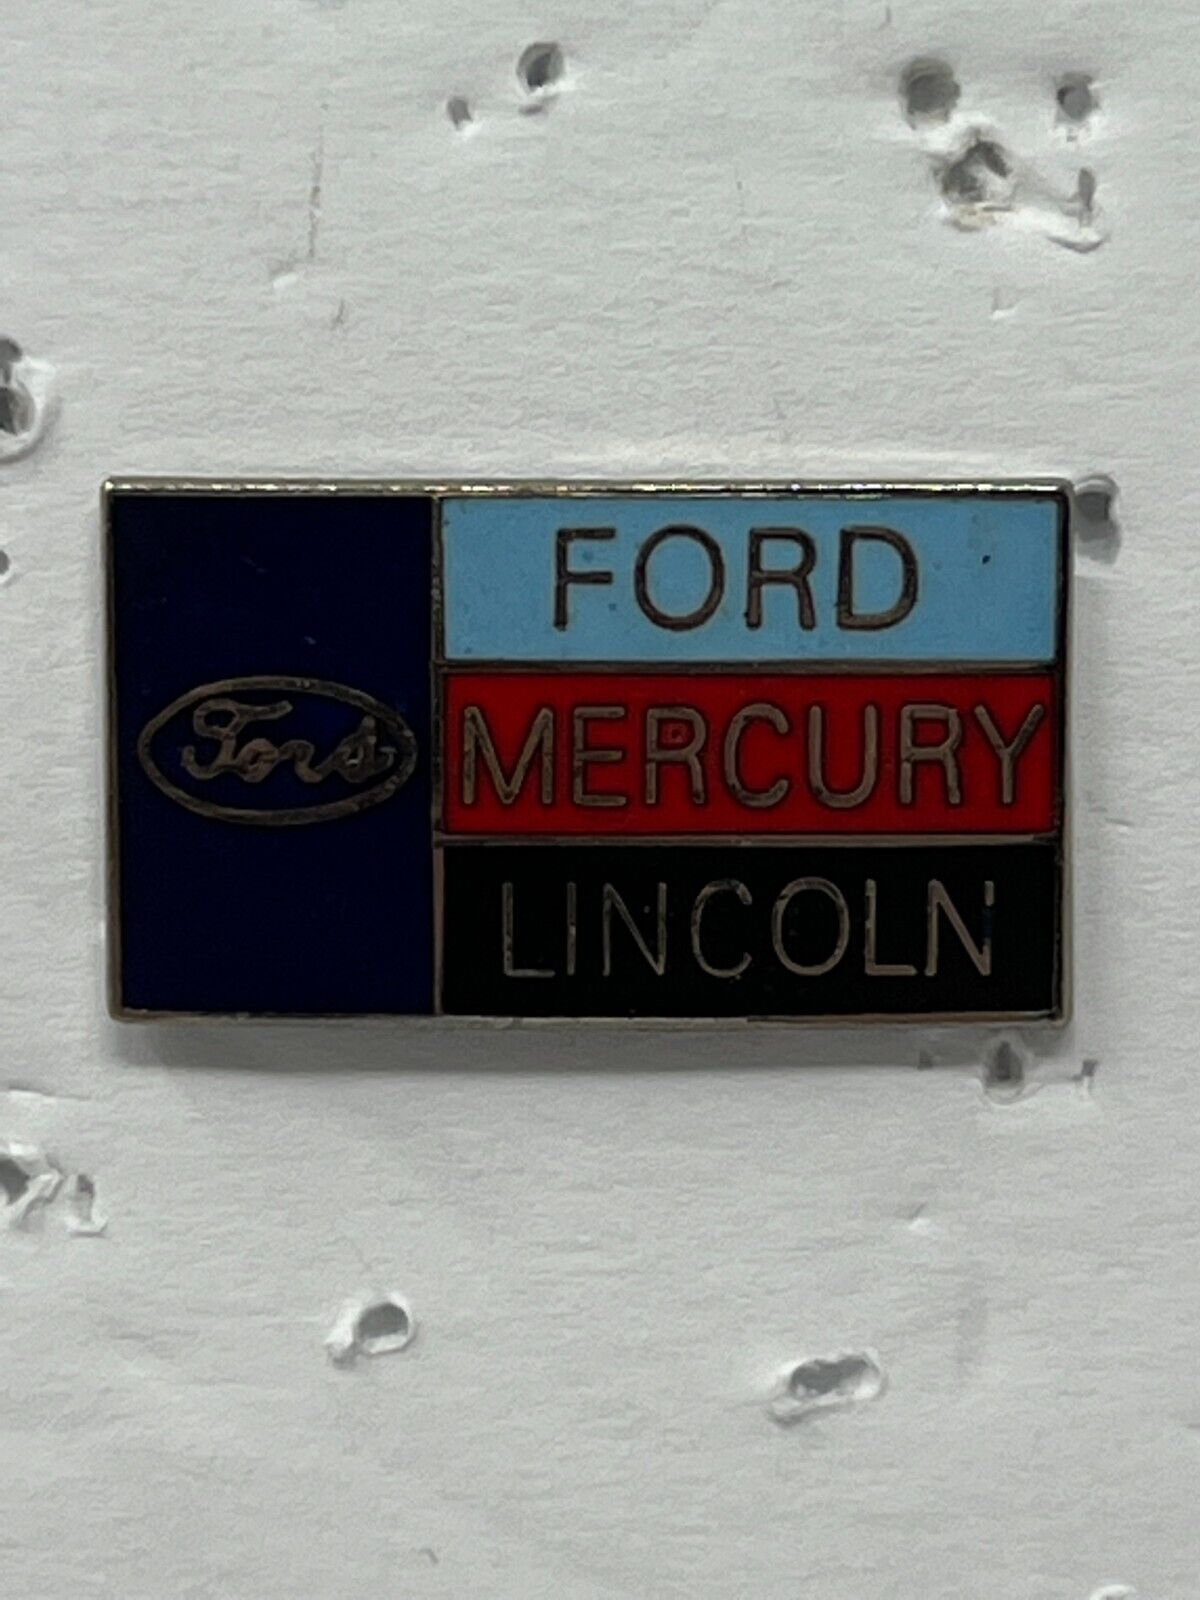 Ford Mercury Lincoln Car Dealership Automotive Lapel Pin